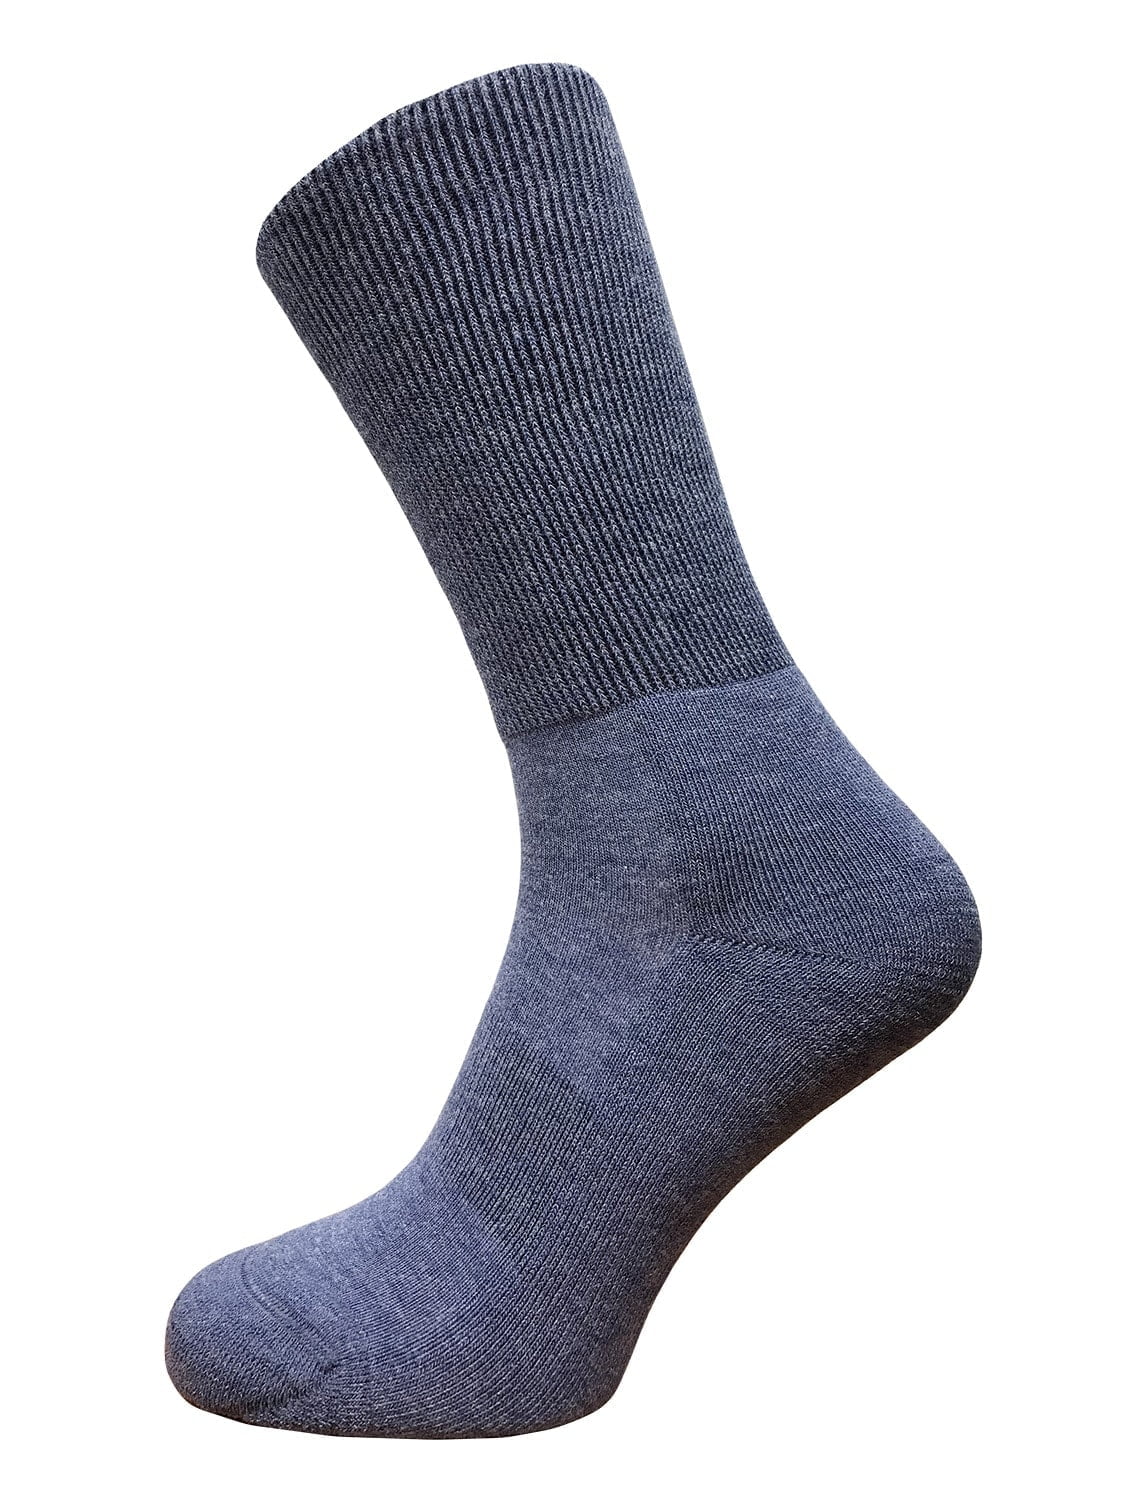 Mid-Calf Socks for Men & Women » Chaffree